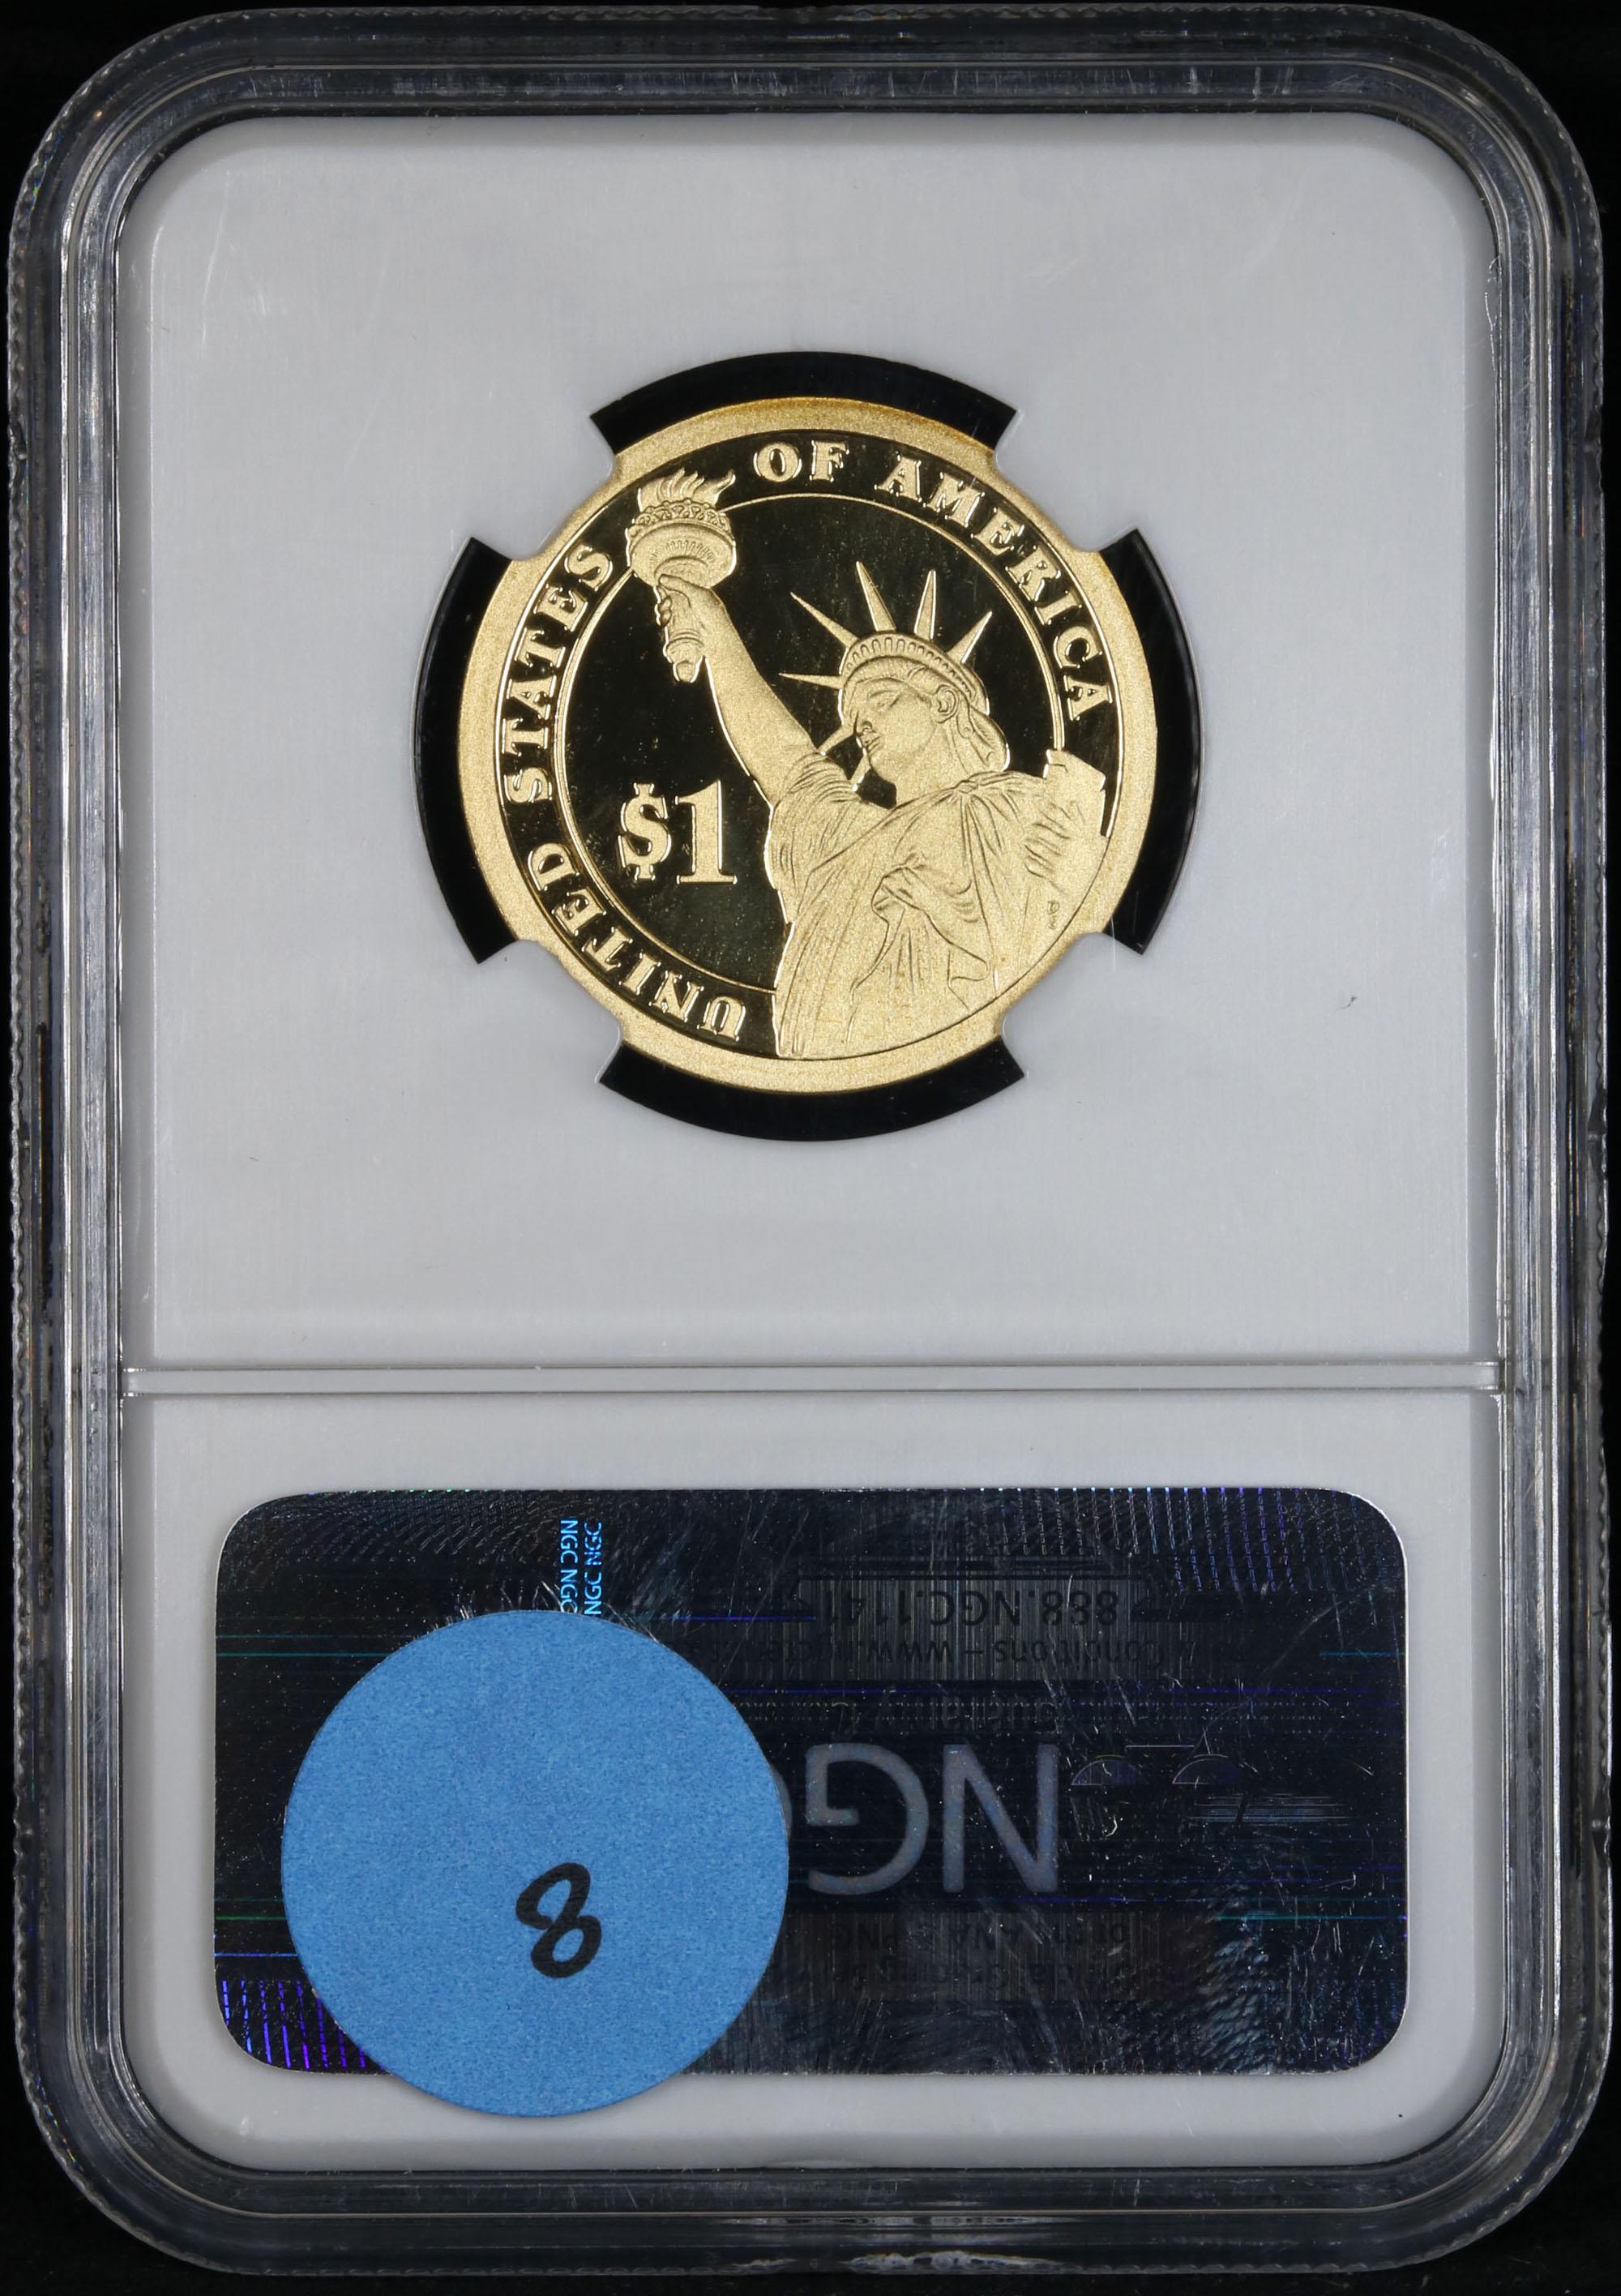 NGC 2010-s James Buchanan Presidential Dollar $1 Graded pr69 DCAM by NGC